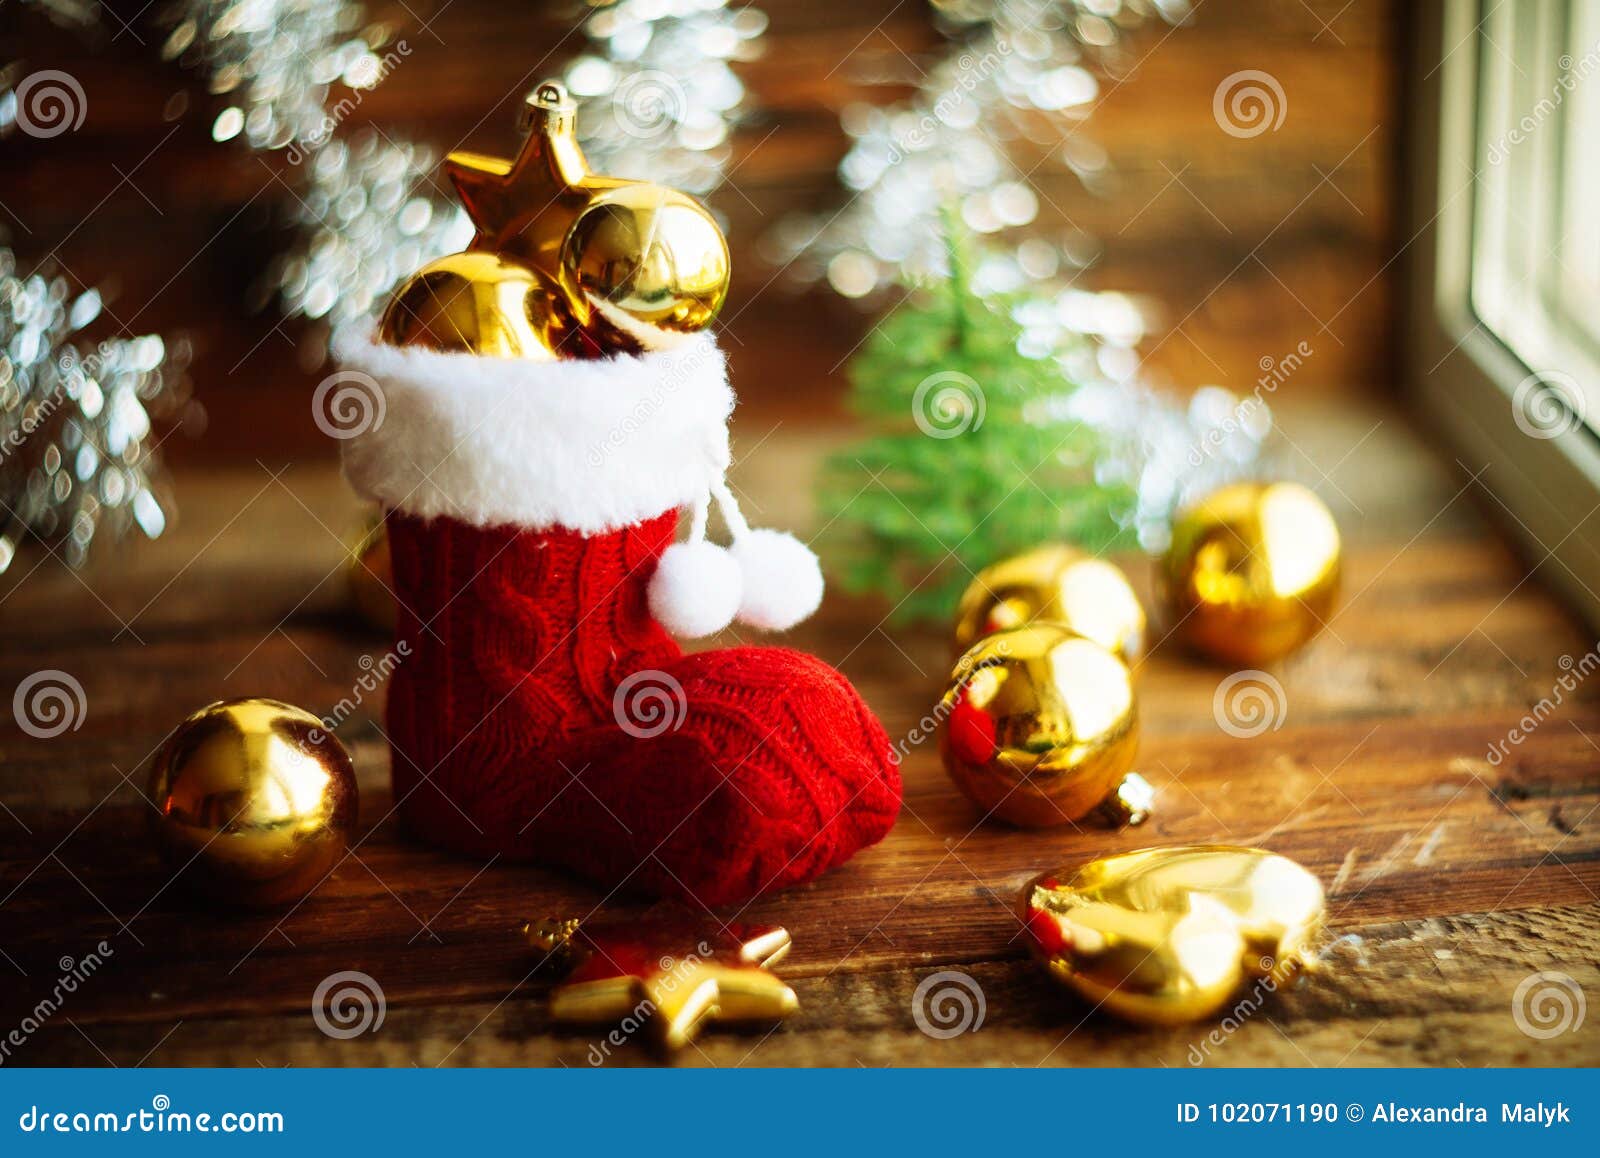 Christmas Decoration with Santa S Boot and Christmas Tree Balls Stock ...